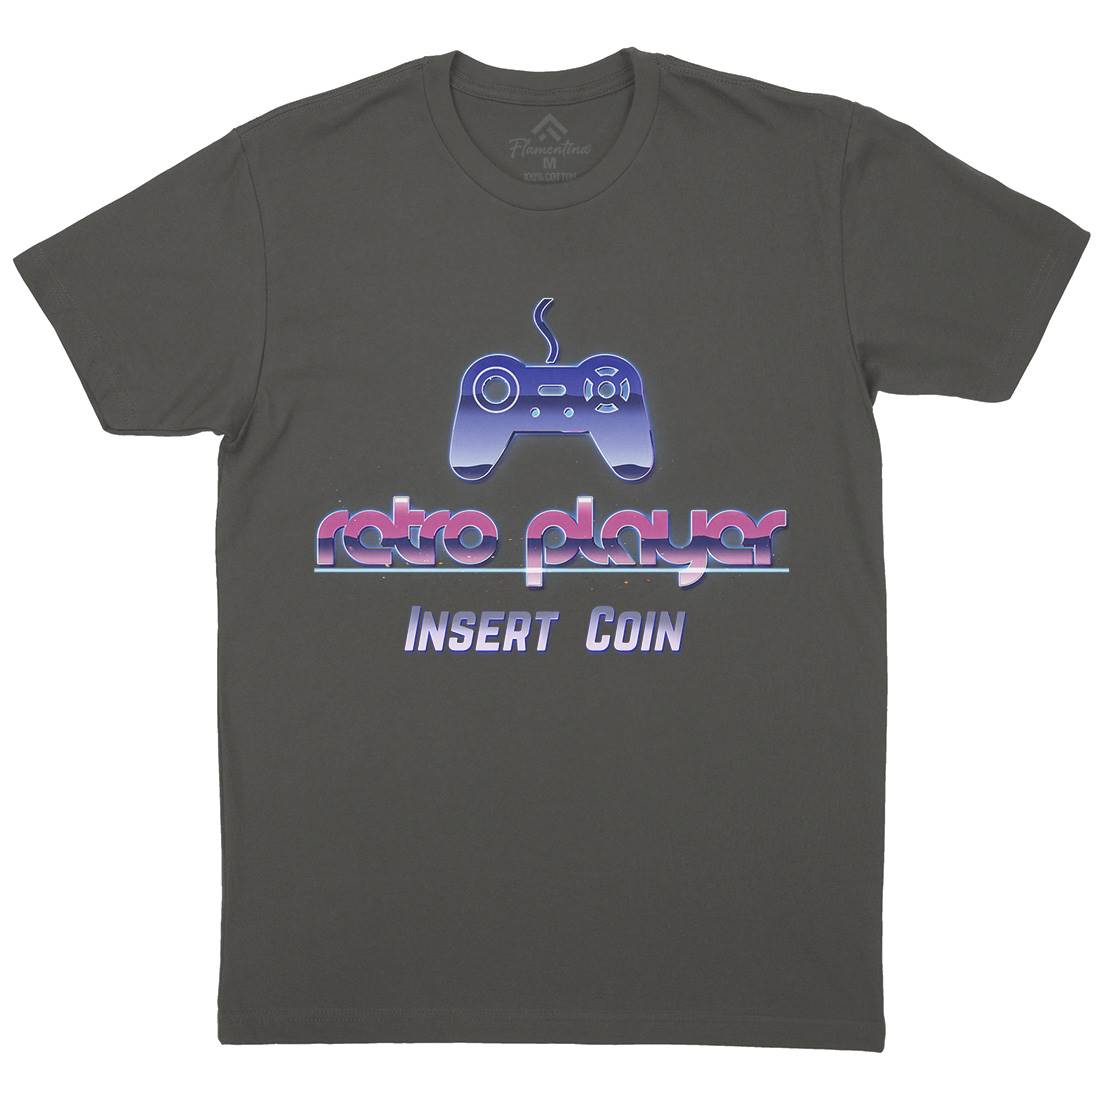 Retro Player Mens Crew Neck T-Shirt Geek B998